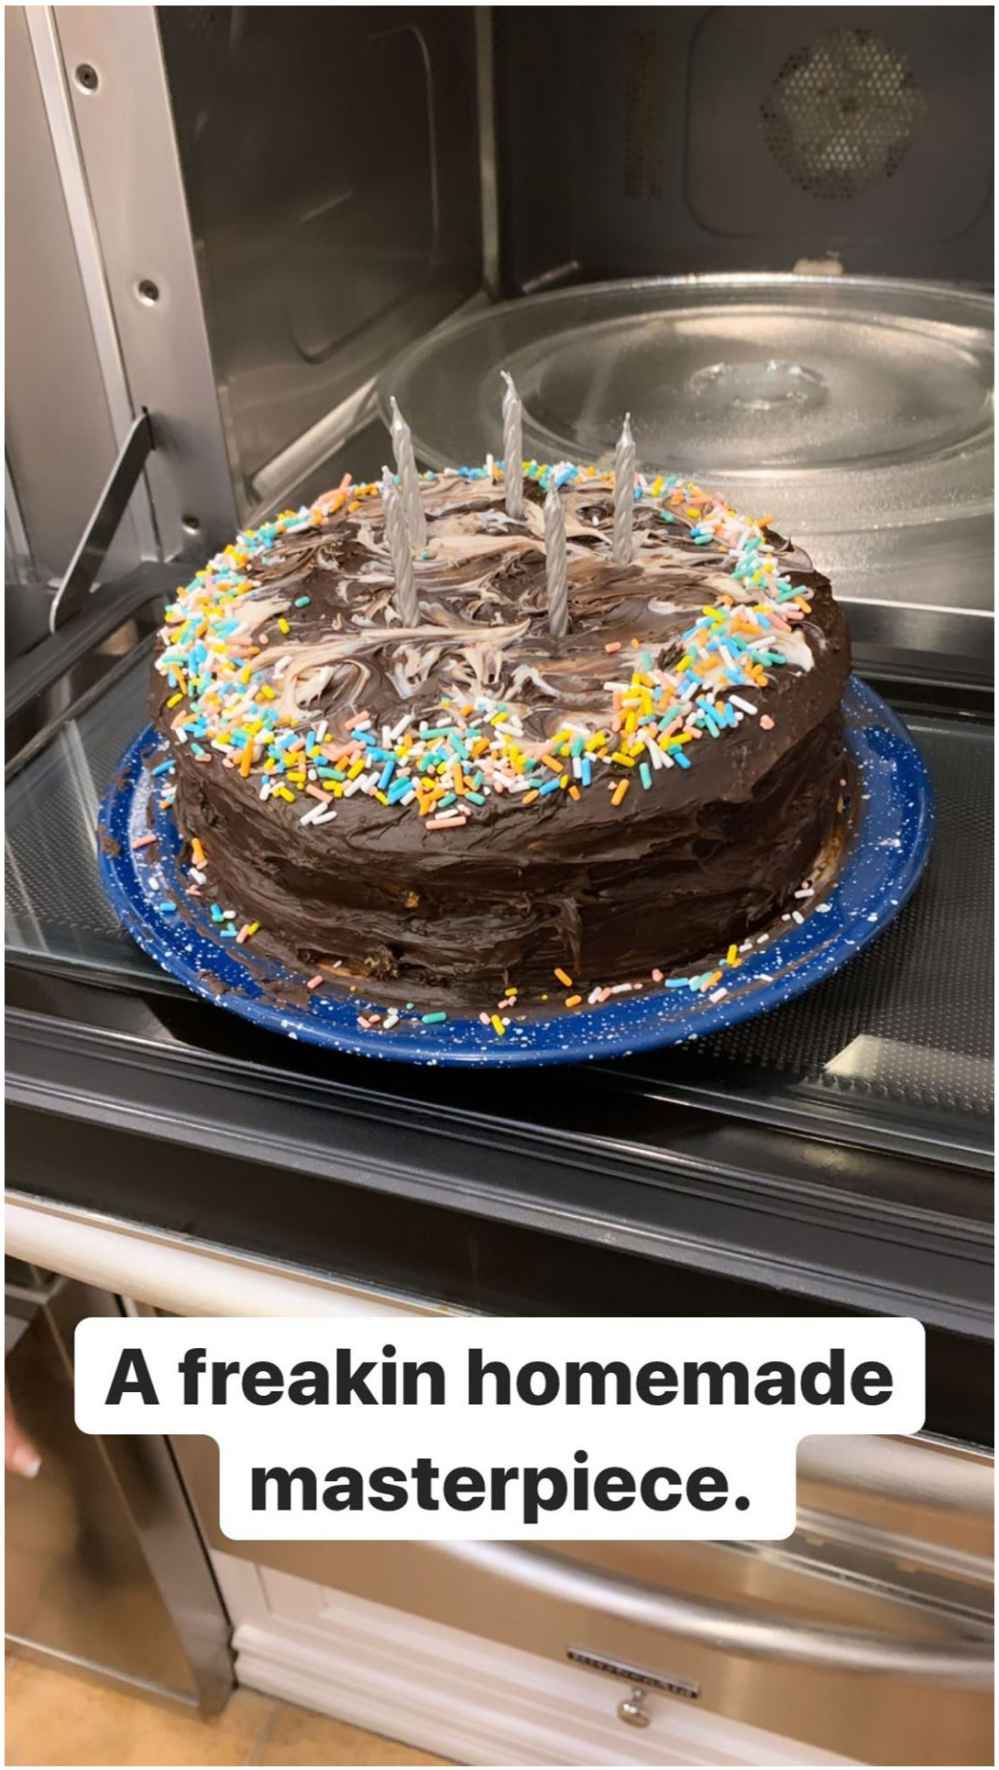 Stassi Schroeder Makes Beau Clark a Quarantine Cake for His Birthday